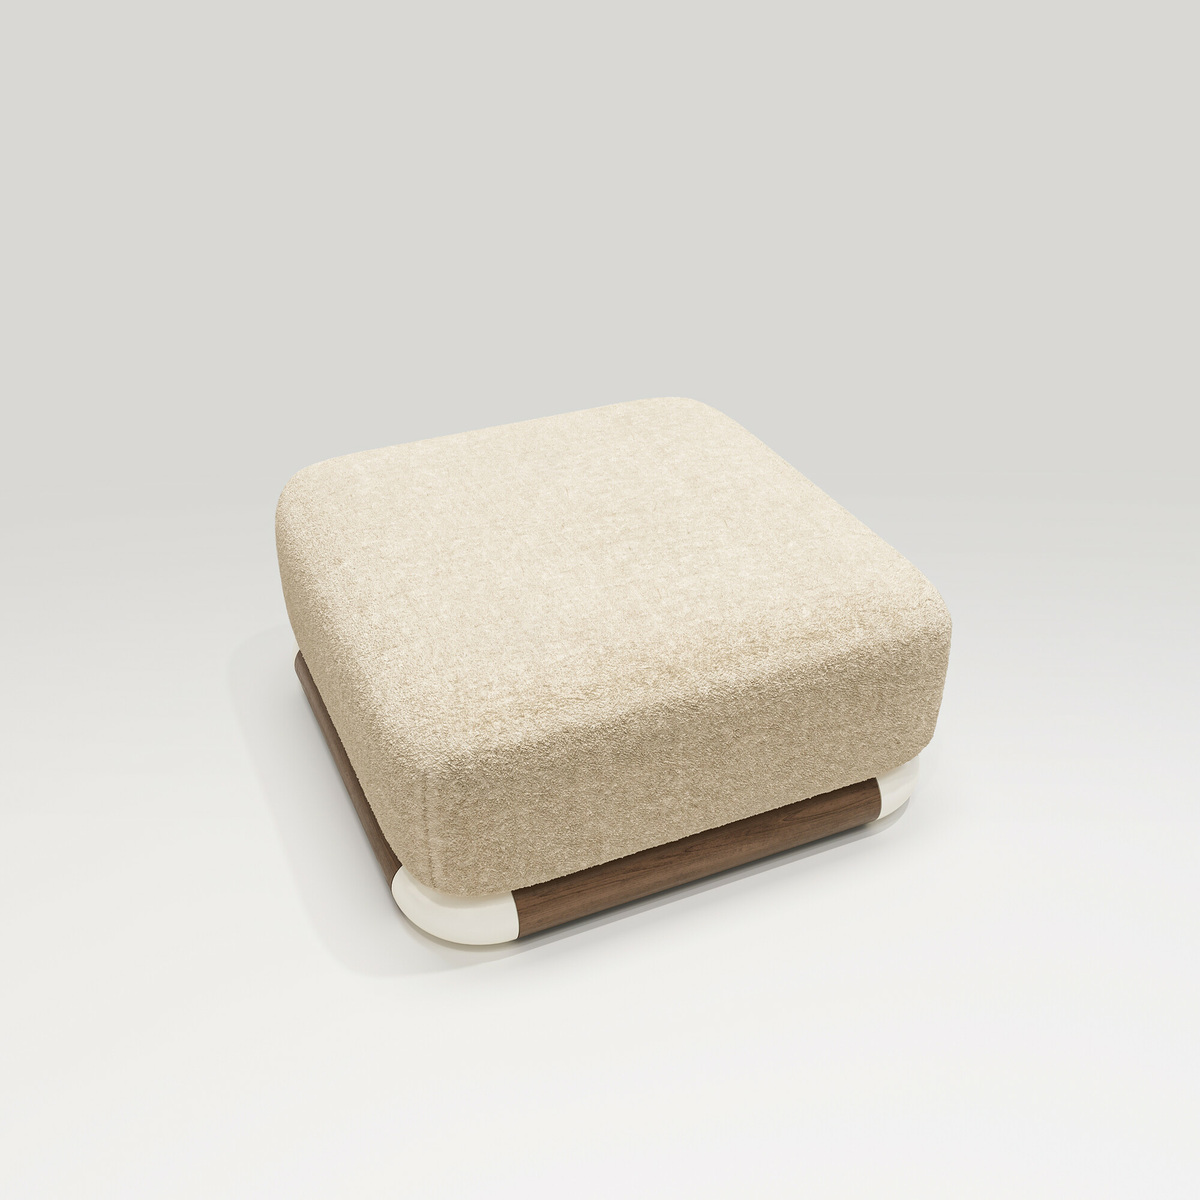 Nico Small Pouffe, Cream - L39 x W39 x H19 cm - Walnut/Wool/Cotton - image 1